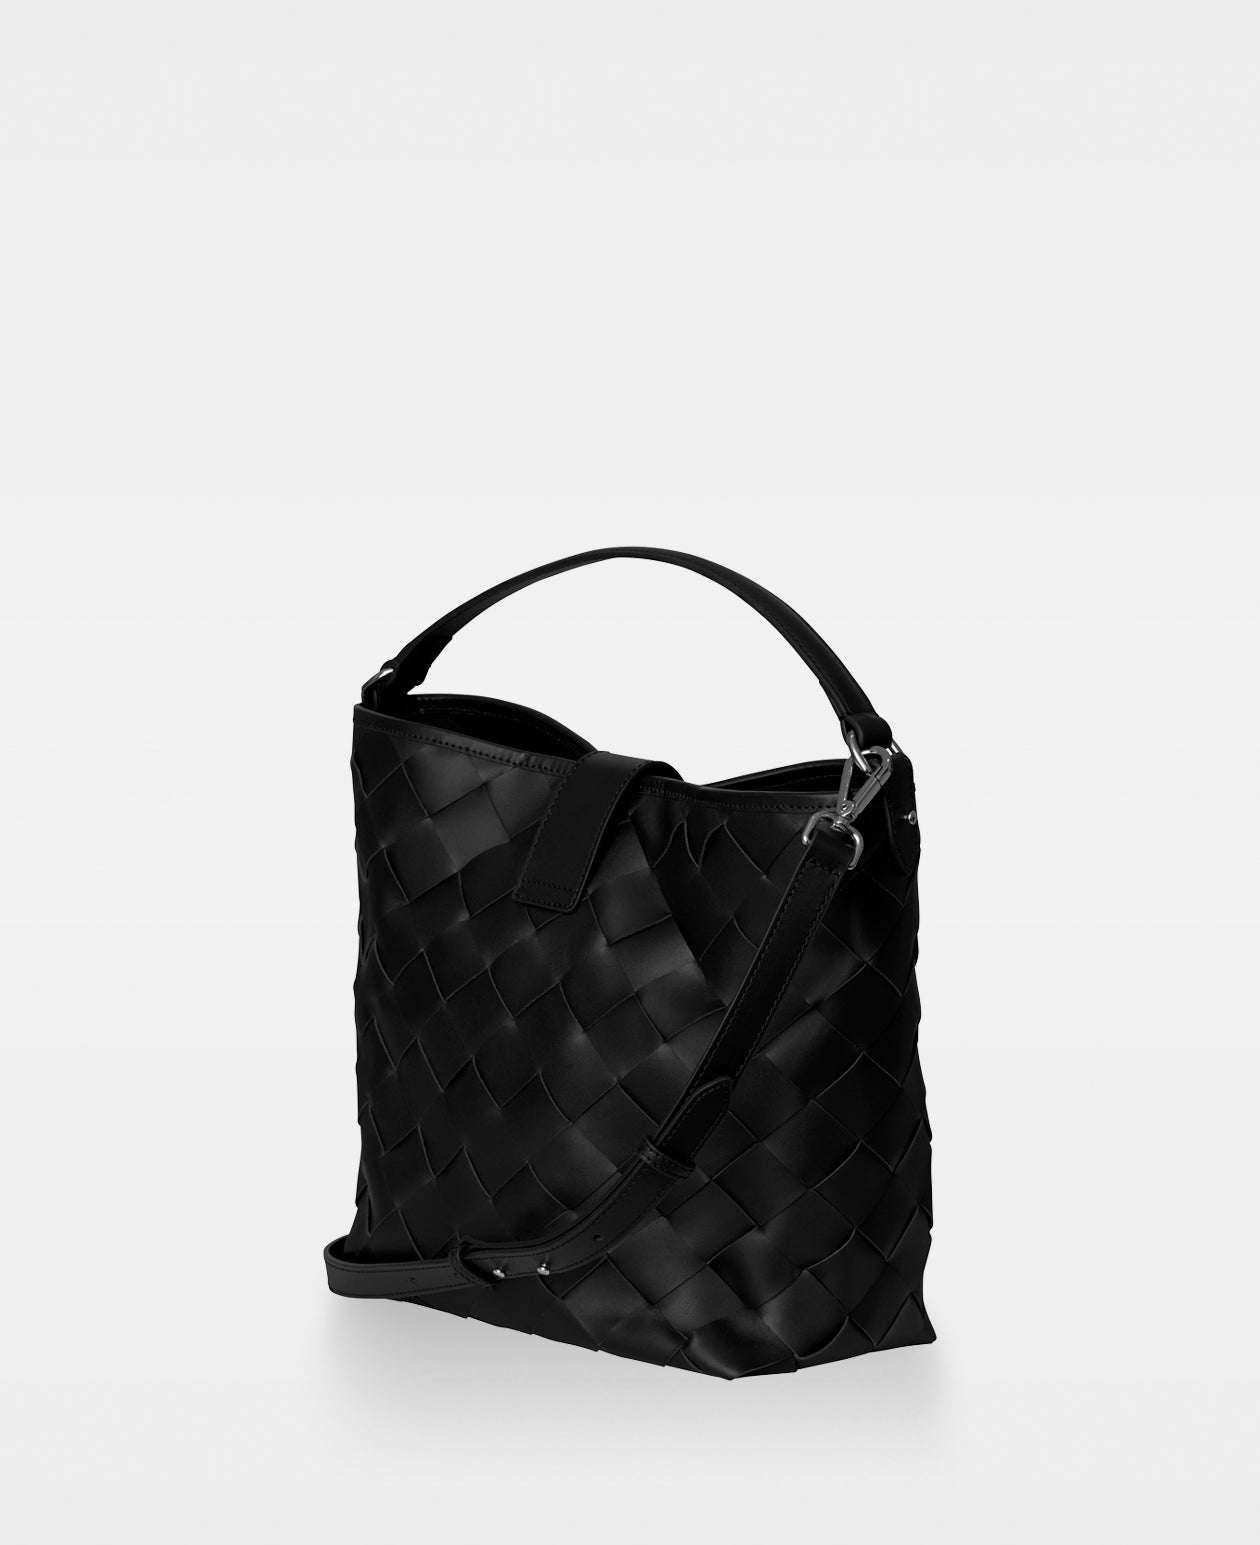 Piazza Edition Franziska Bucket Bag in dark brown/rosé - in the